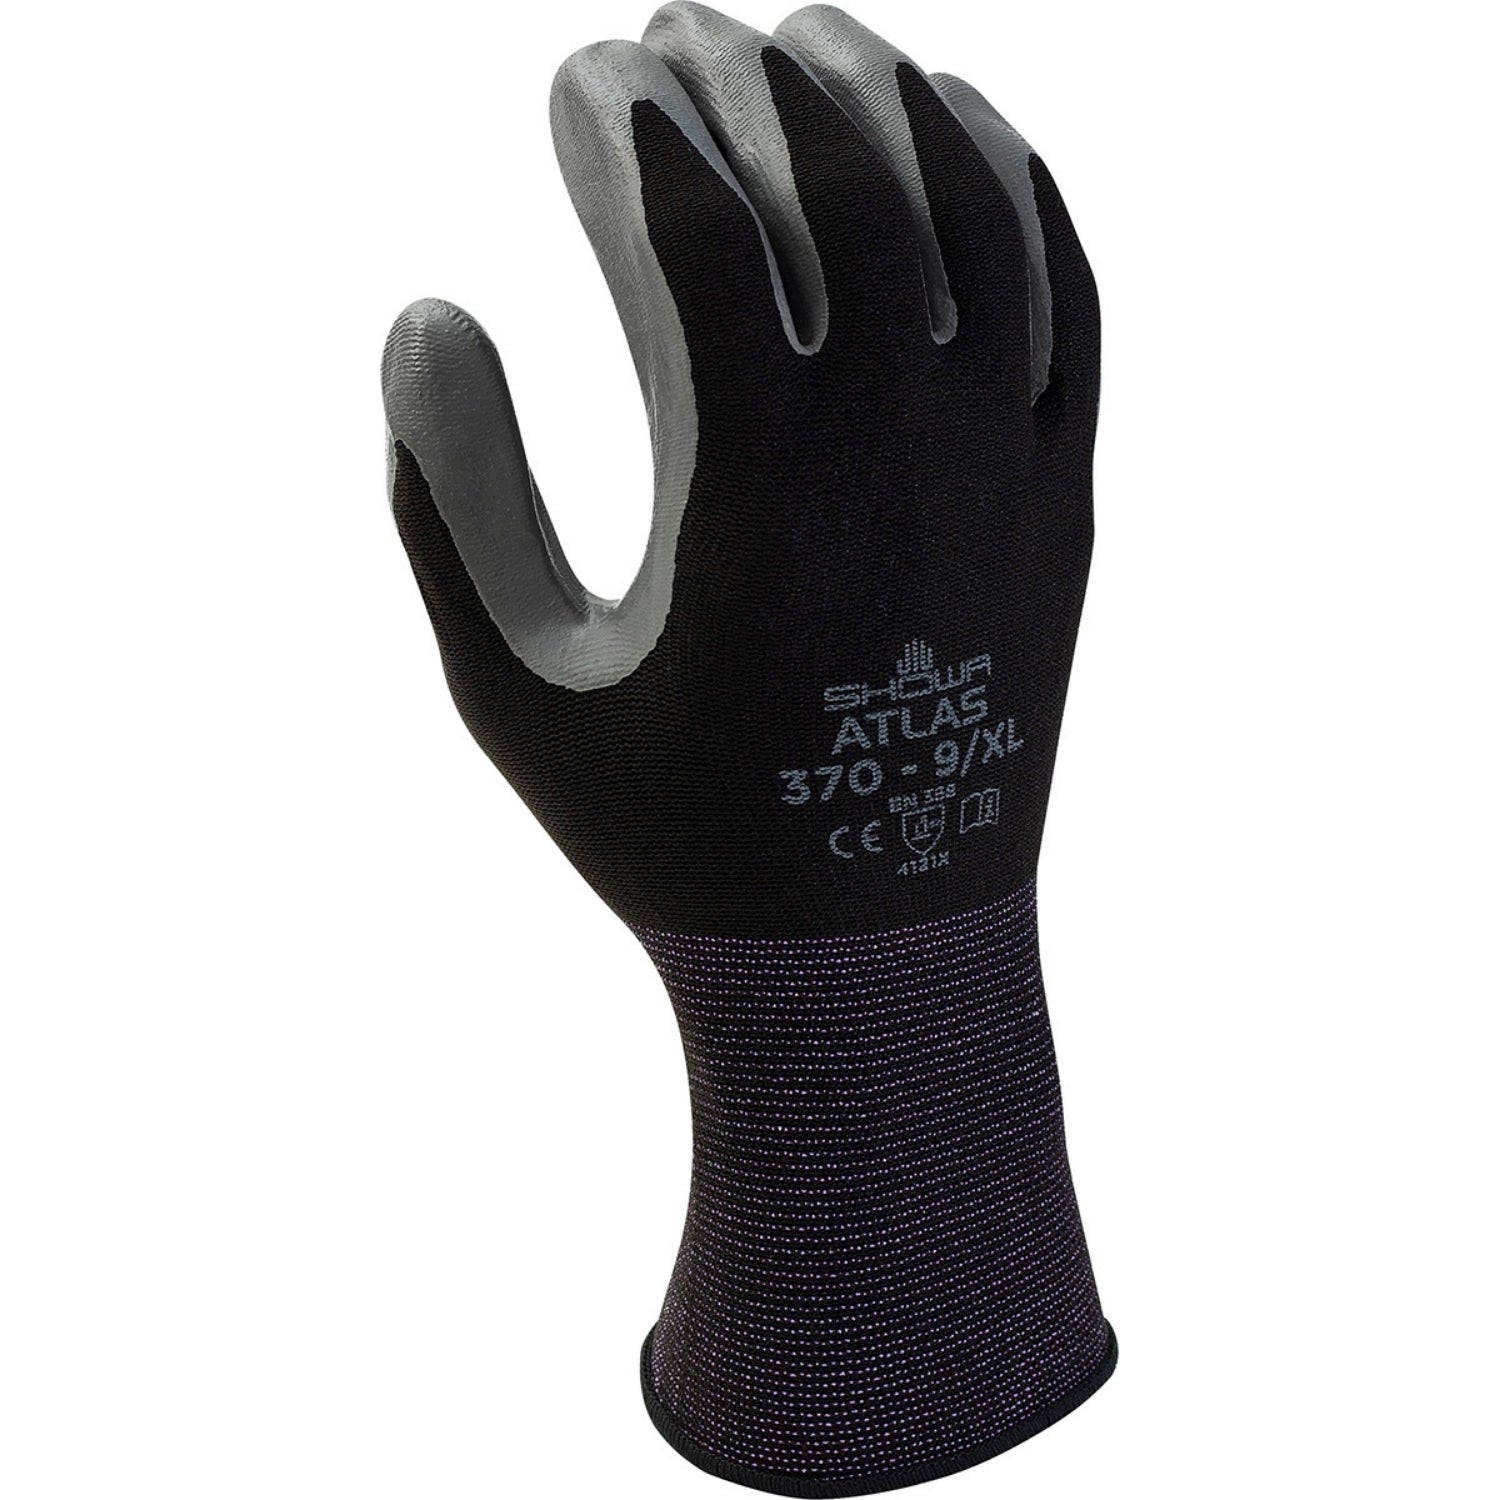 SHOWA 370B - General Purpose Gloves 3 Pack